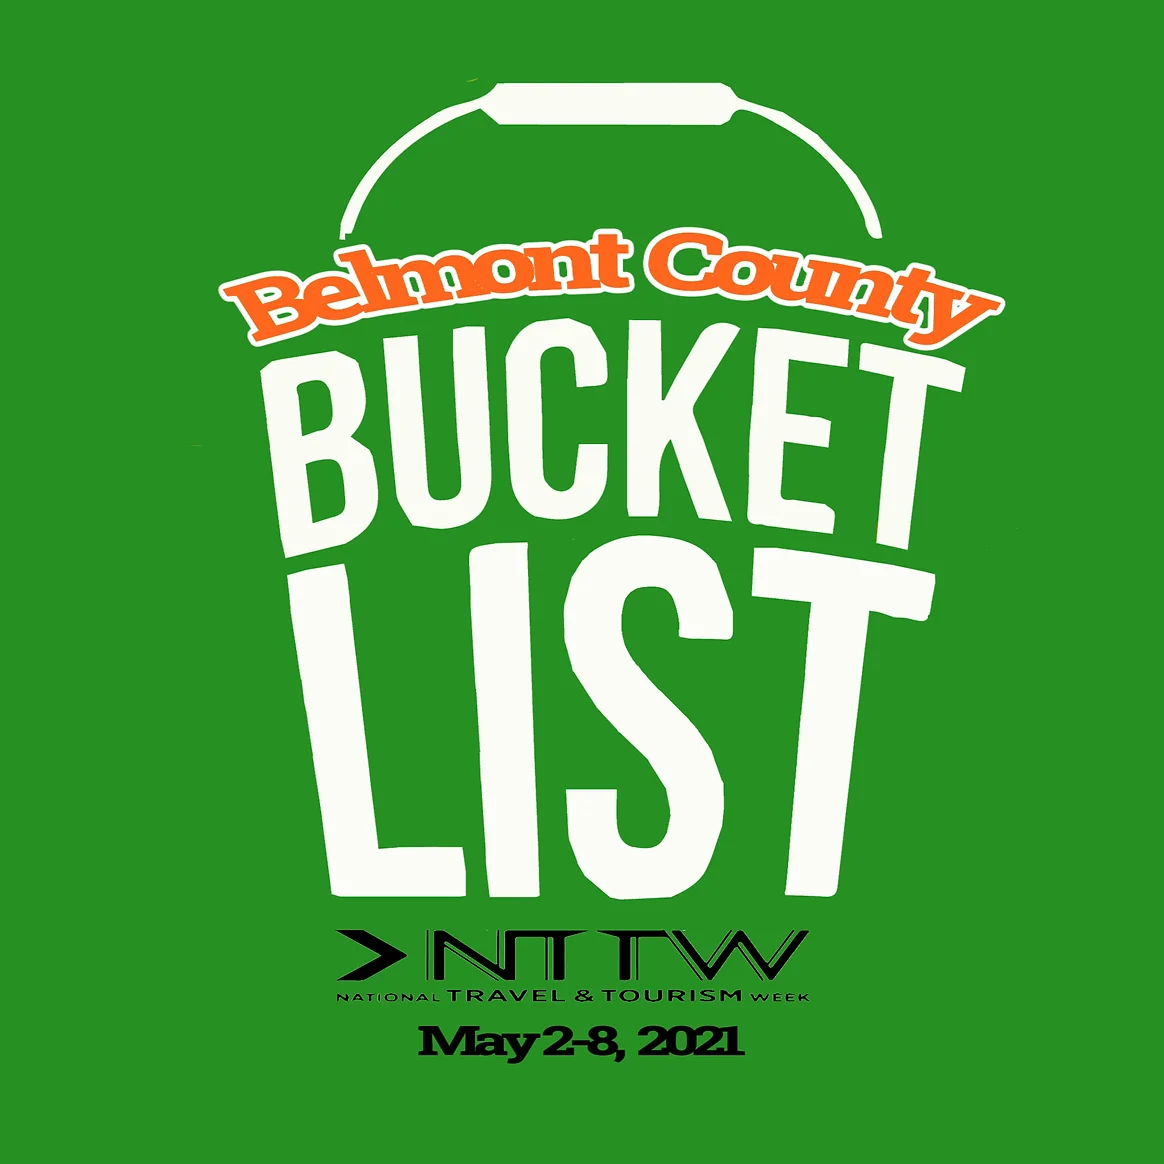 Belmont County Bucket List flier for May 2021